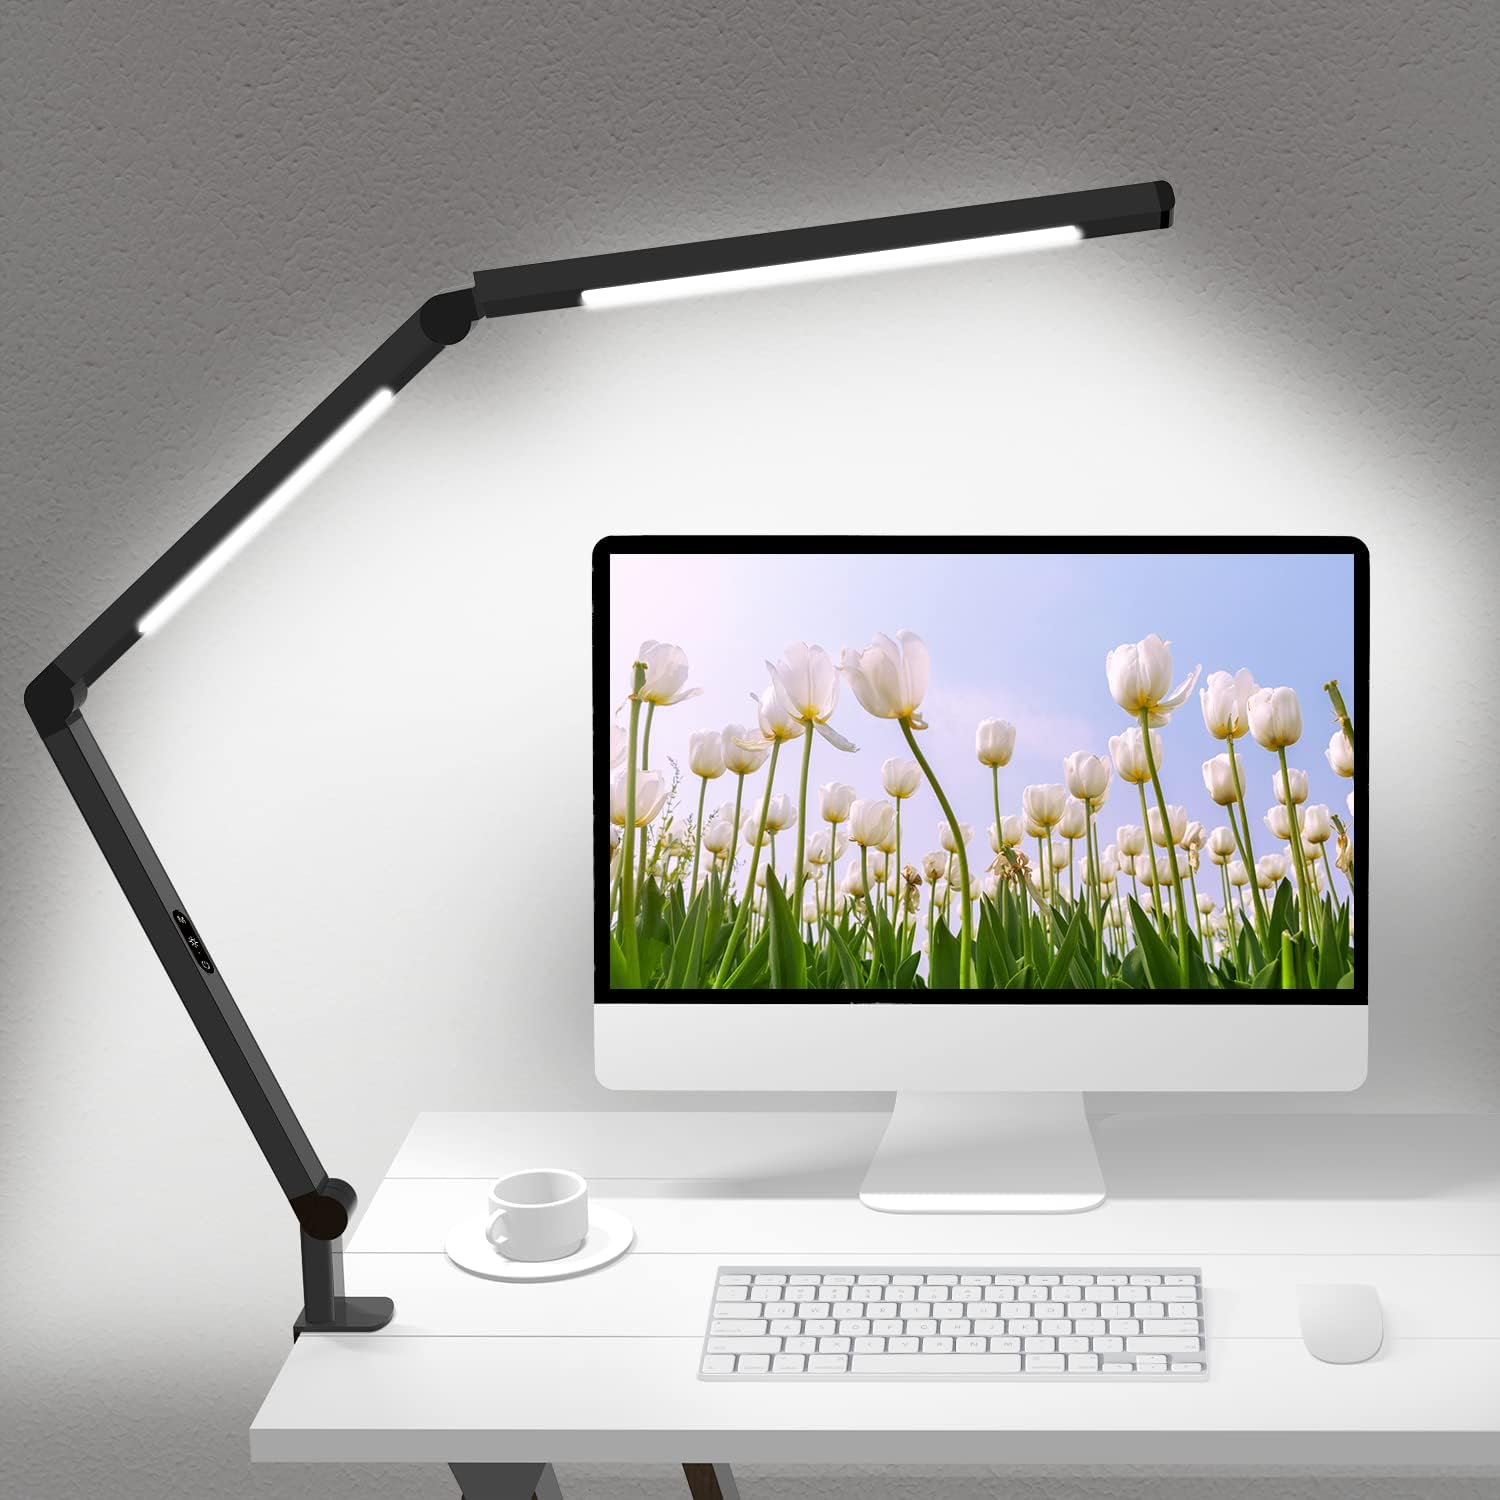 Micomlan Modern Desk Lamp with Clamp